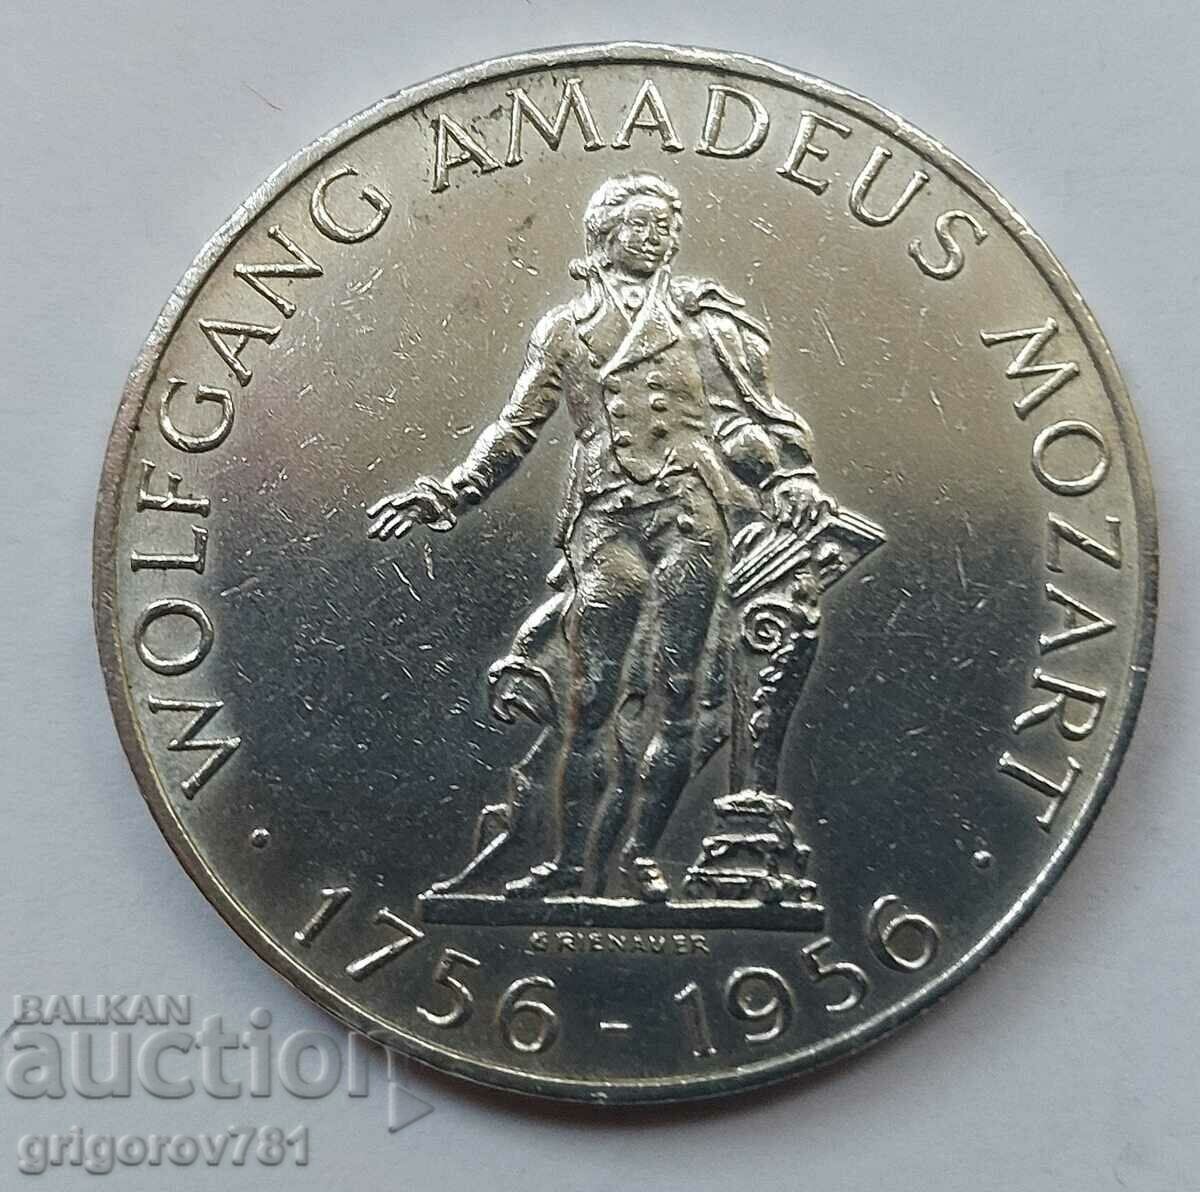 25 Shillings Silver Austria 1956 - Silver Coin #8